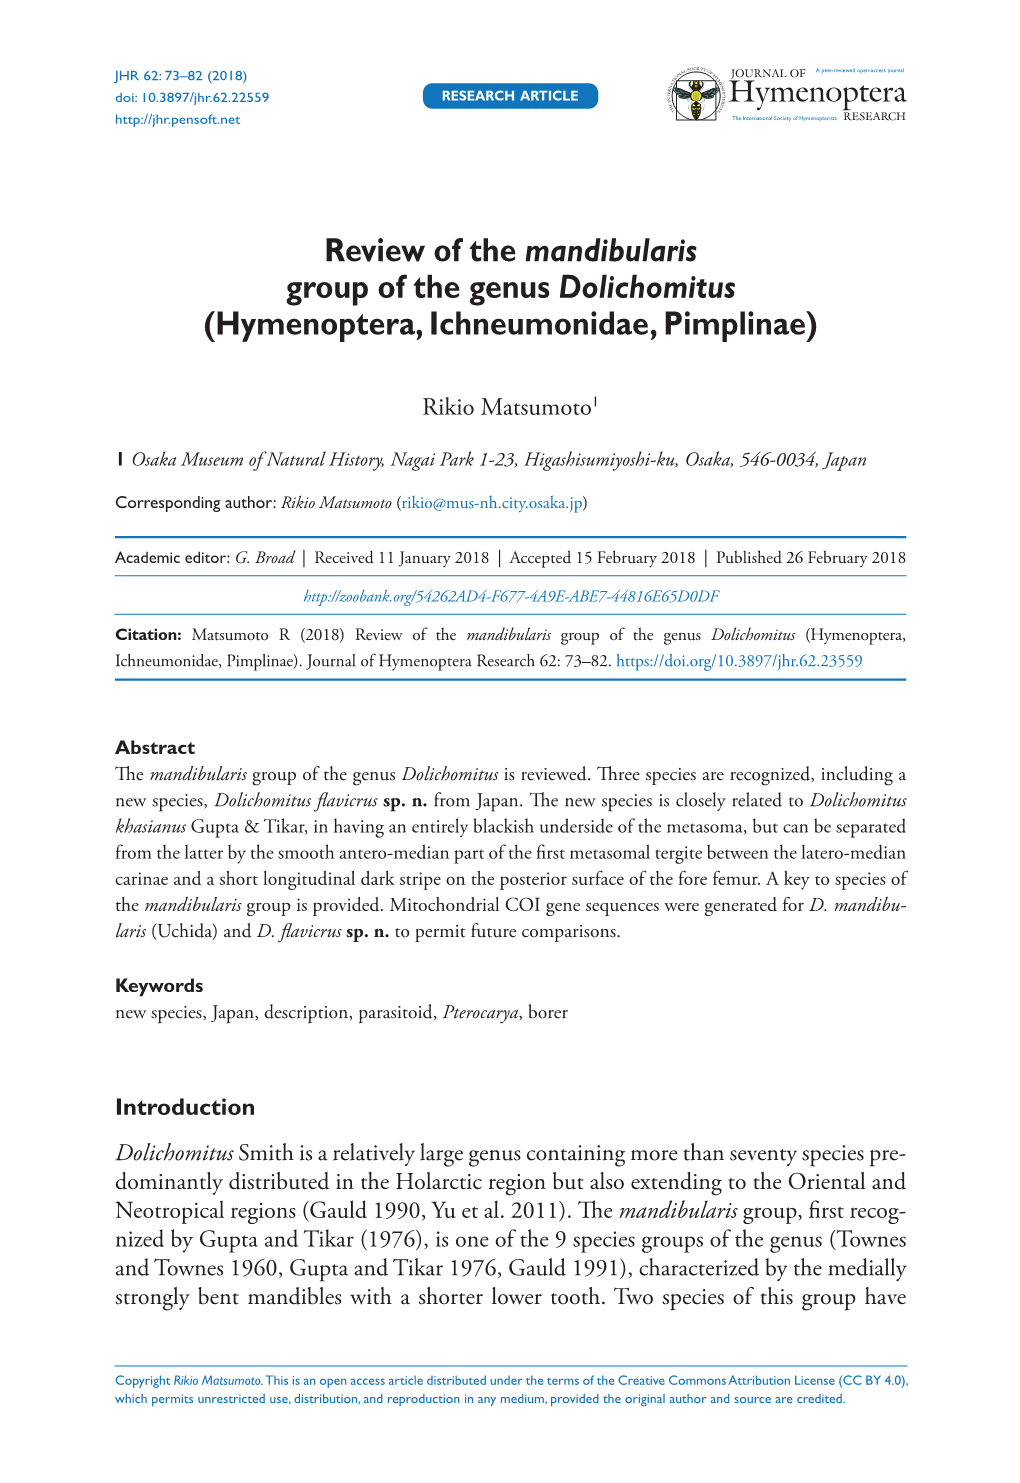 Review of the Mandibularis Group of the Genus Dolichomitus (Hymenoptera, Ichneumonidae, Pimplinae)